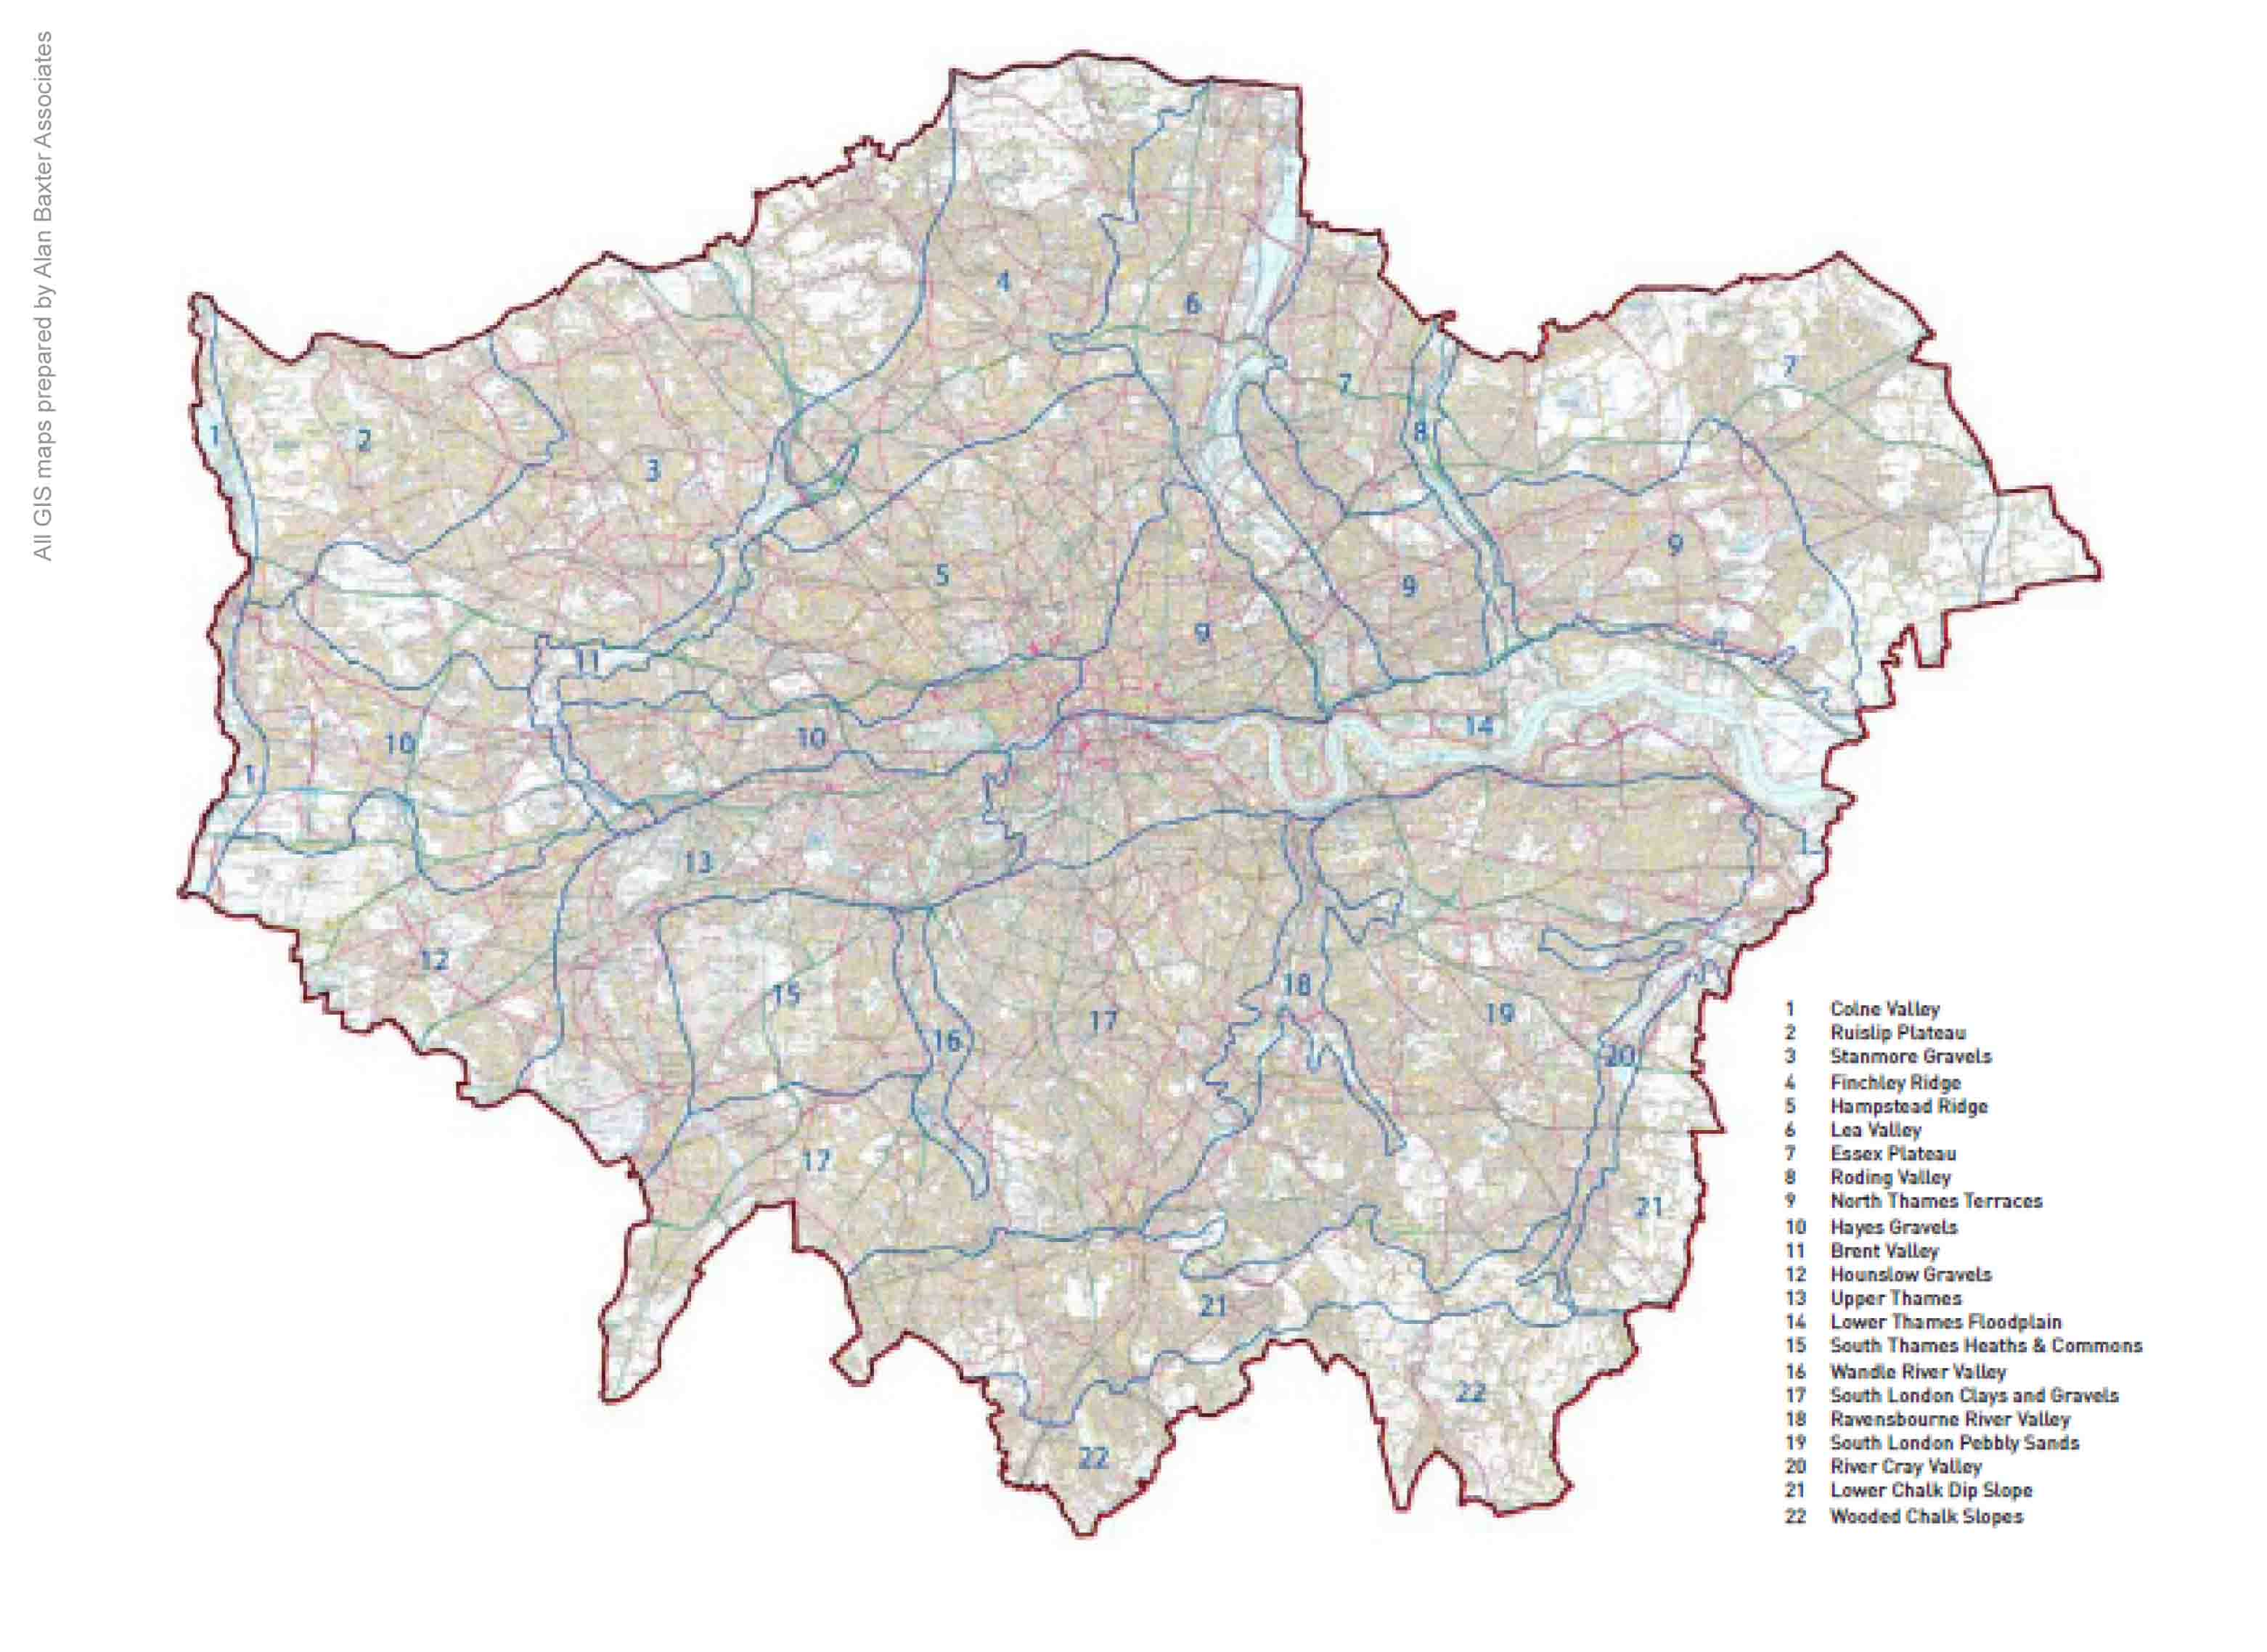 London-wide - landscape types